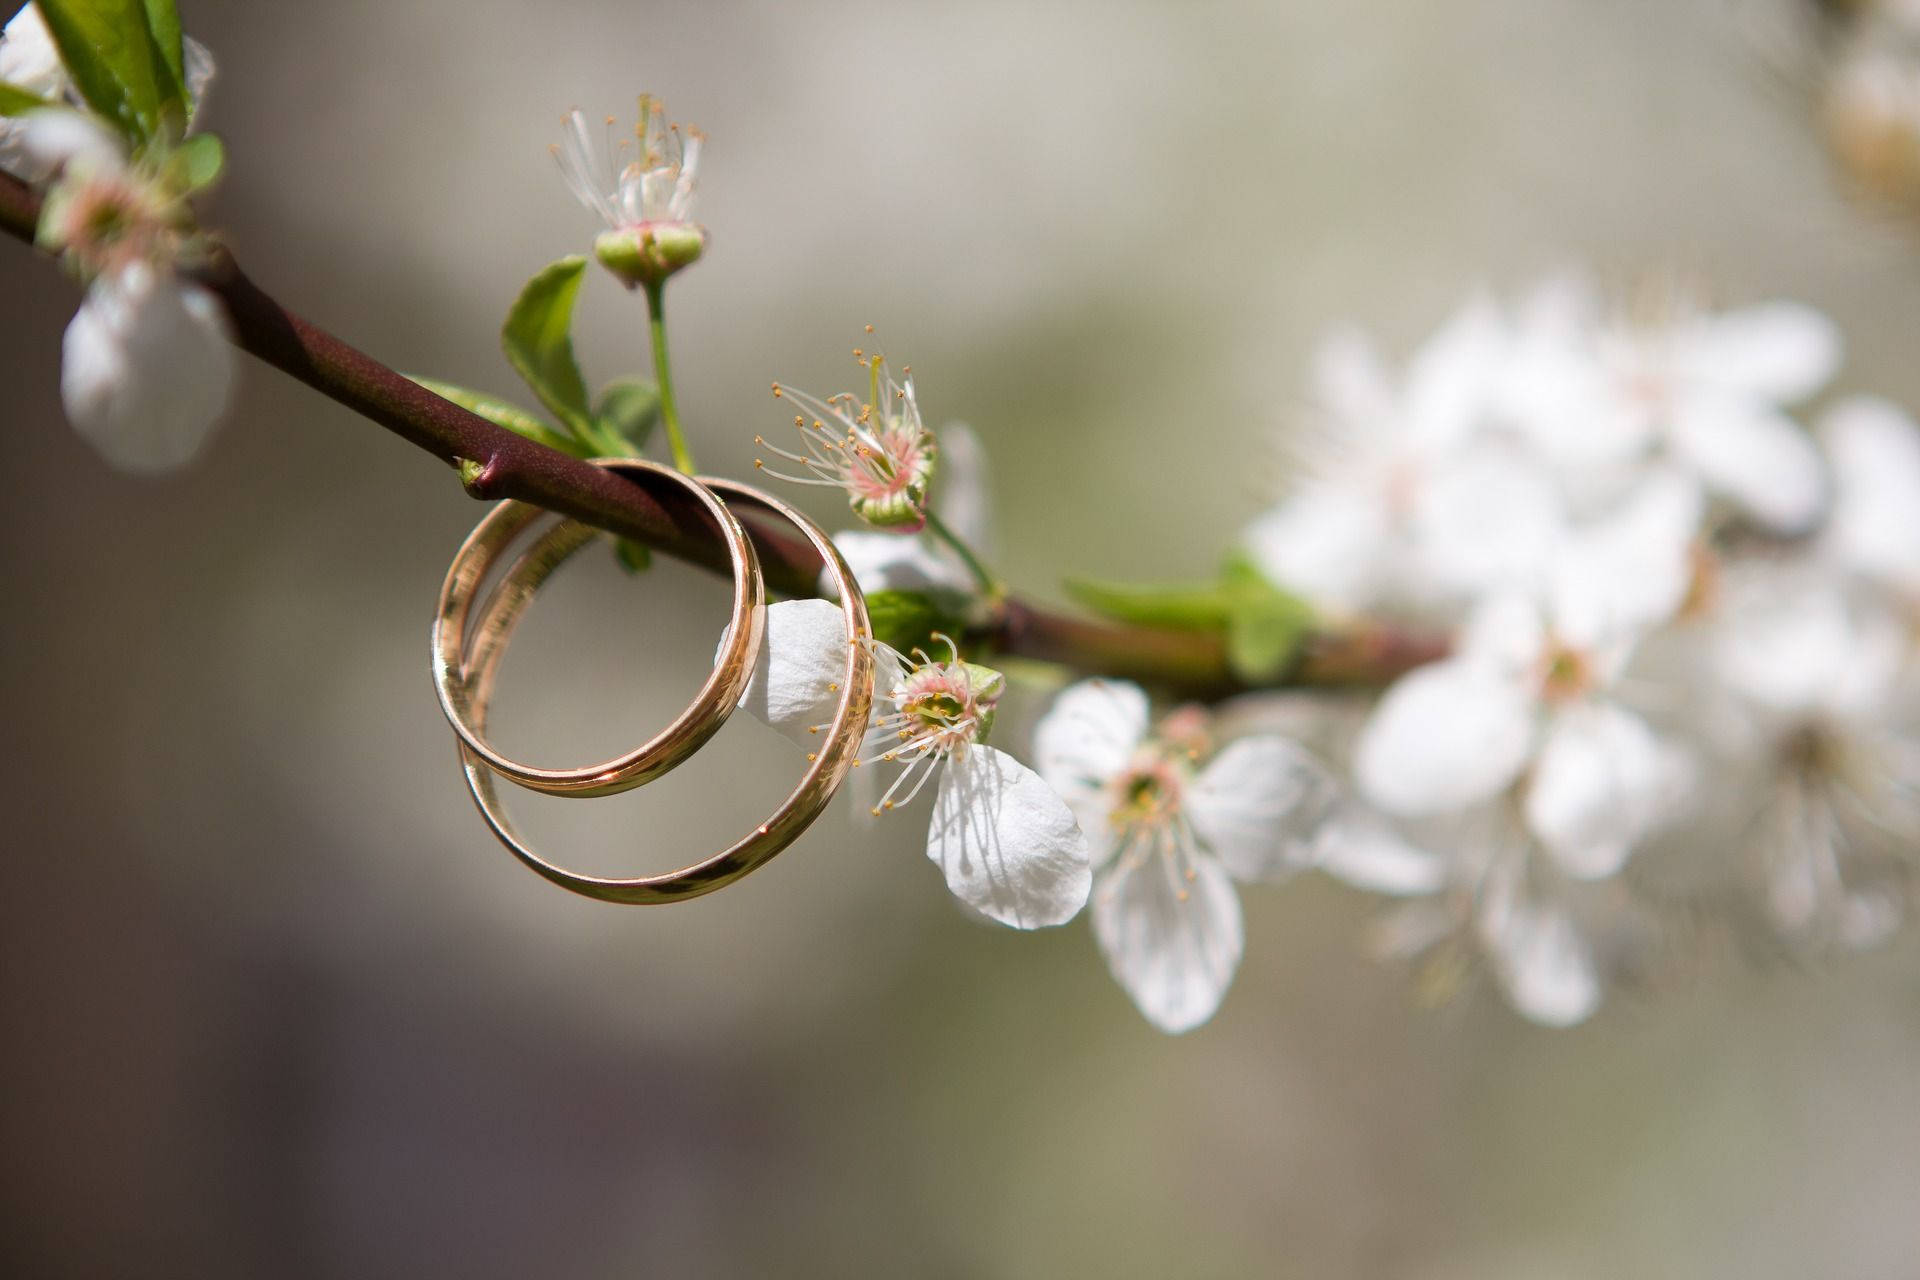 Caption: Romantic White Blossom Wedding Rings